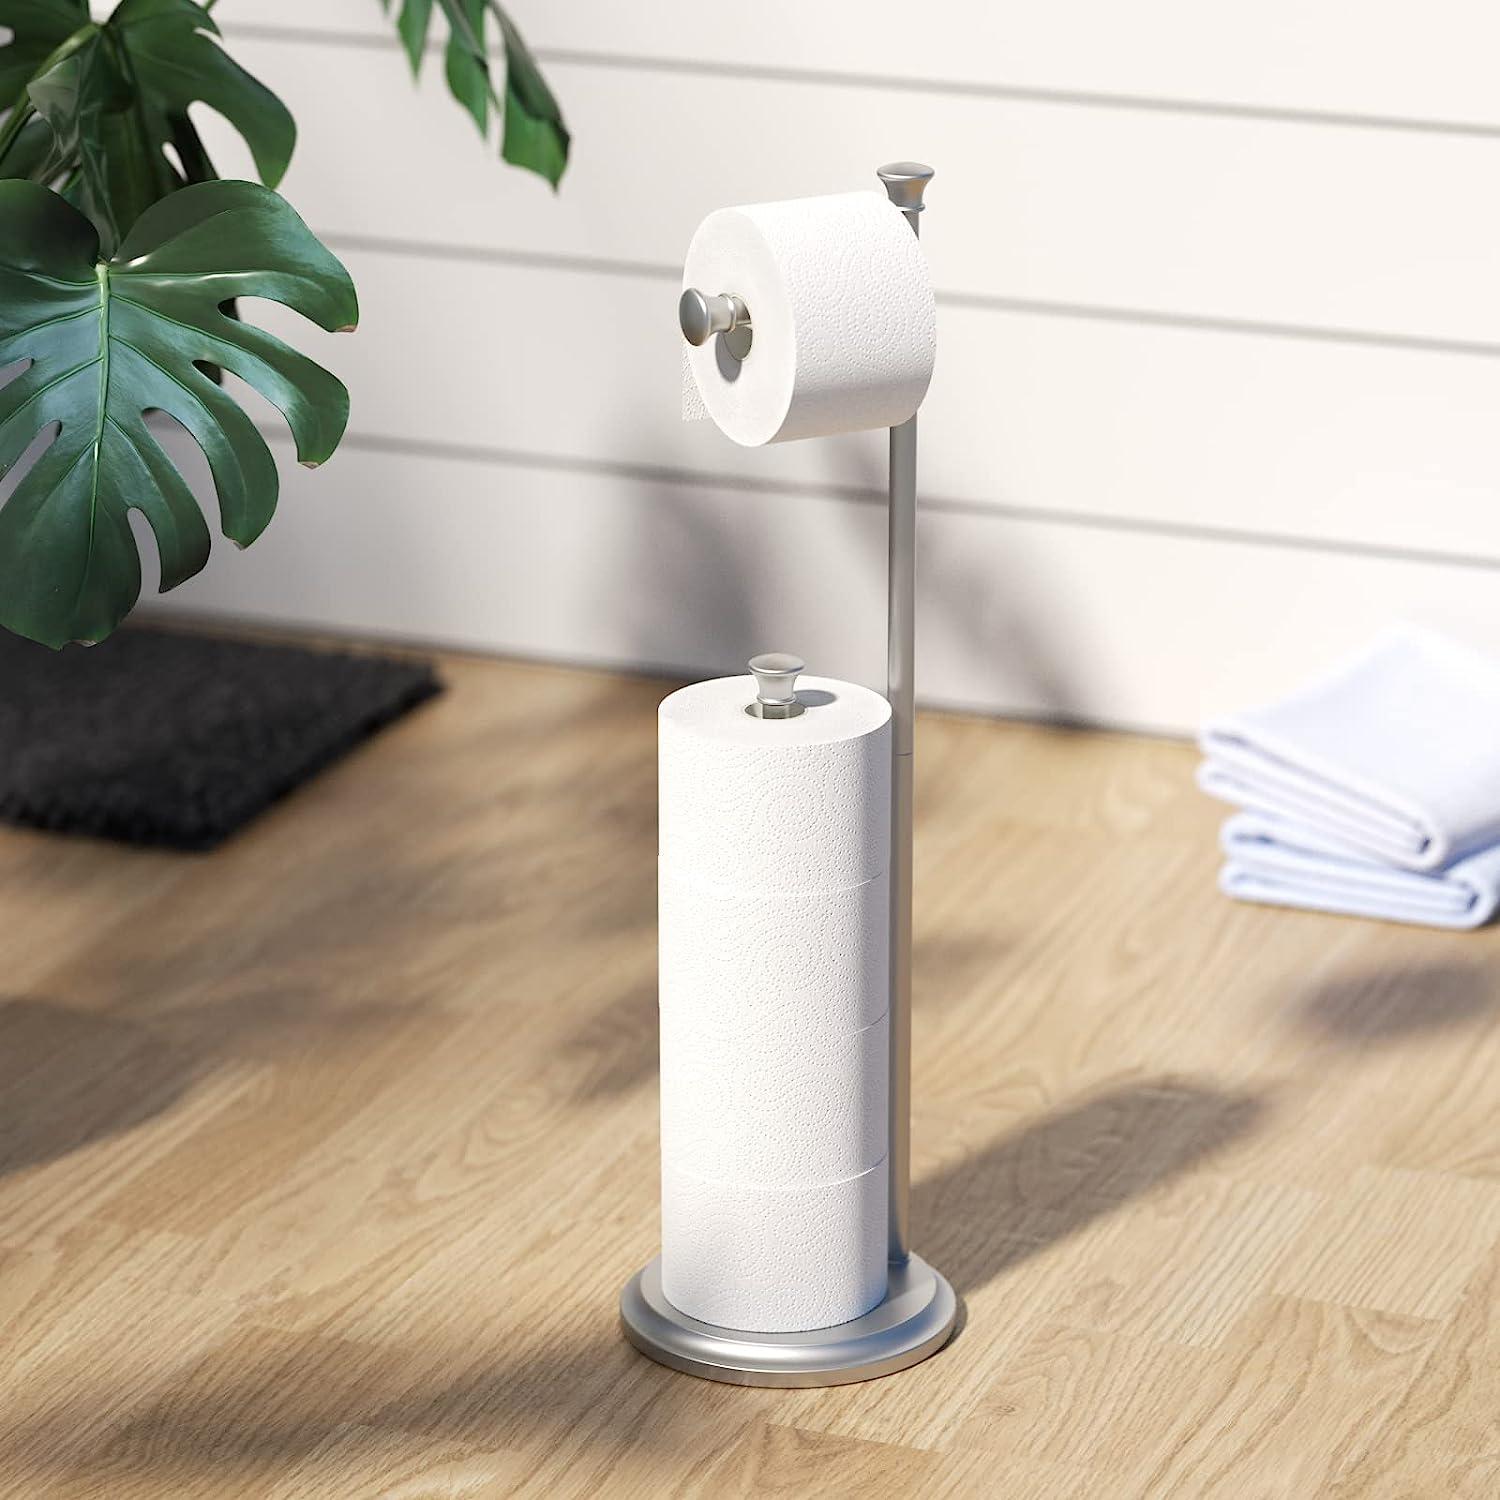 TreeLen Toilet Paper Stand, Bathroom Tissue Holder Freestanding, Stand